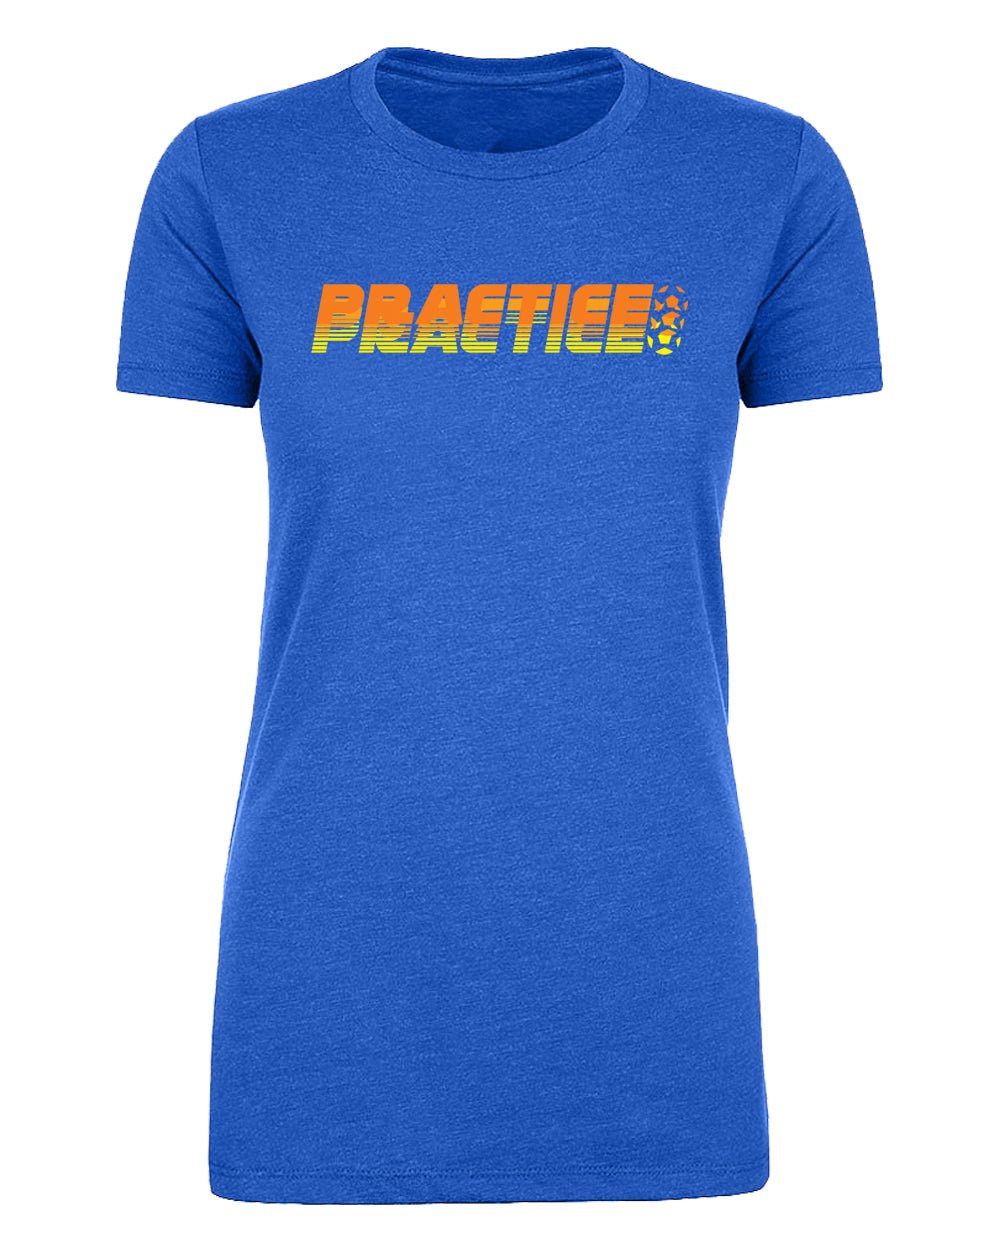 Soccer Practice Womens T Shirts - Mato & Hash